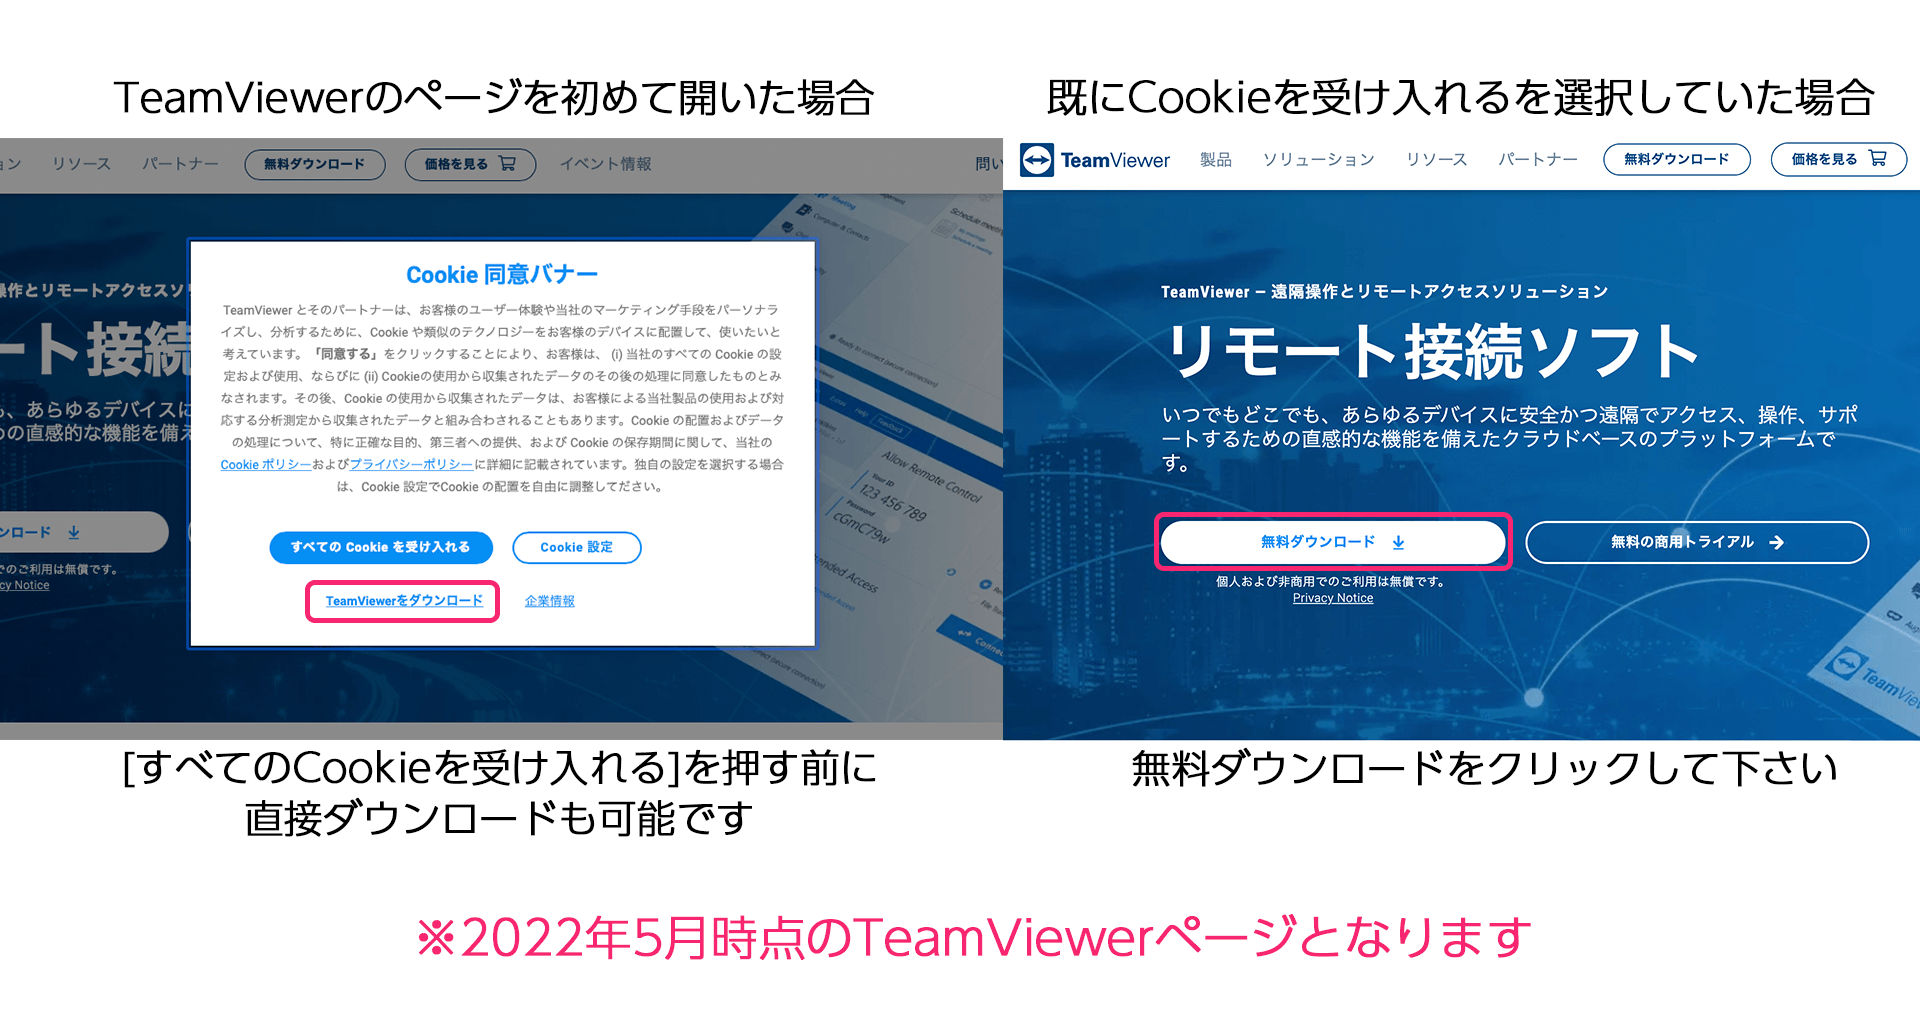 TeamViewerのホームページからダウンロードする方法